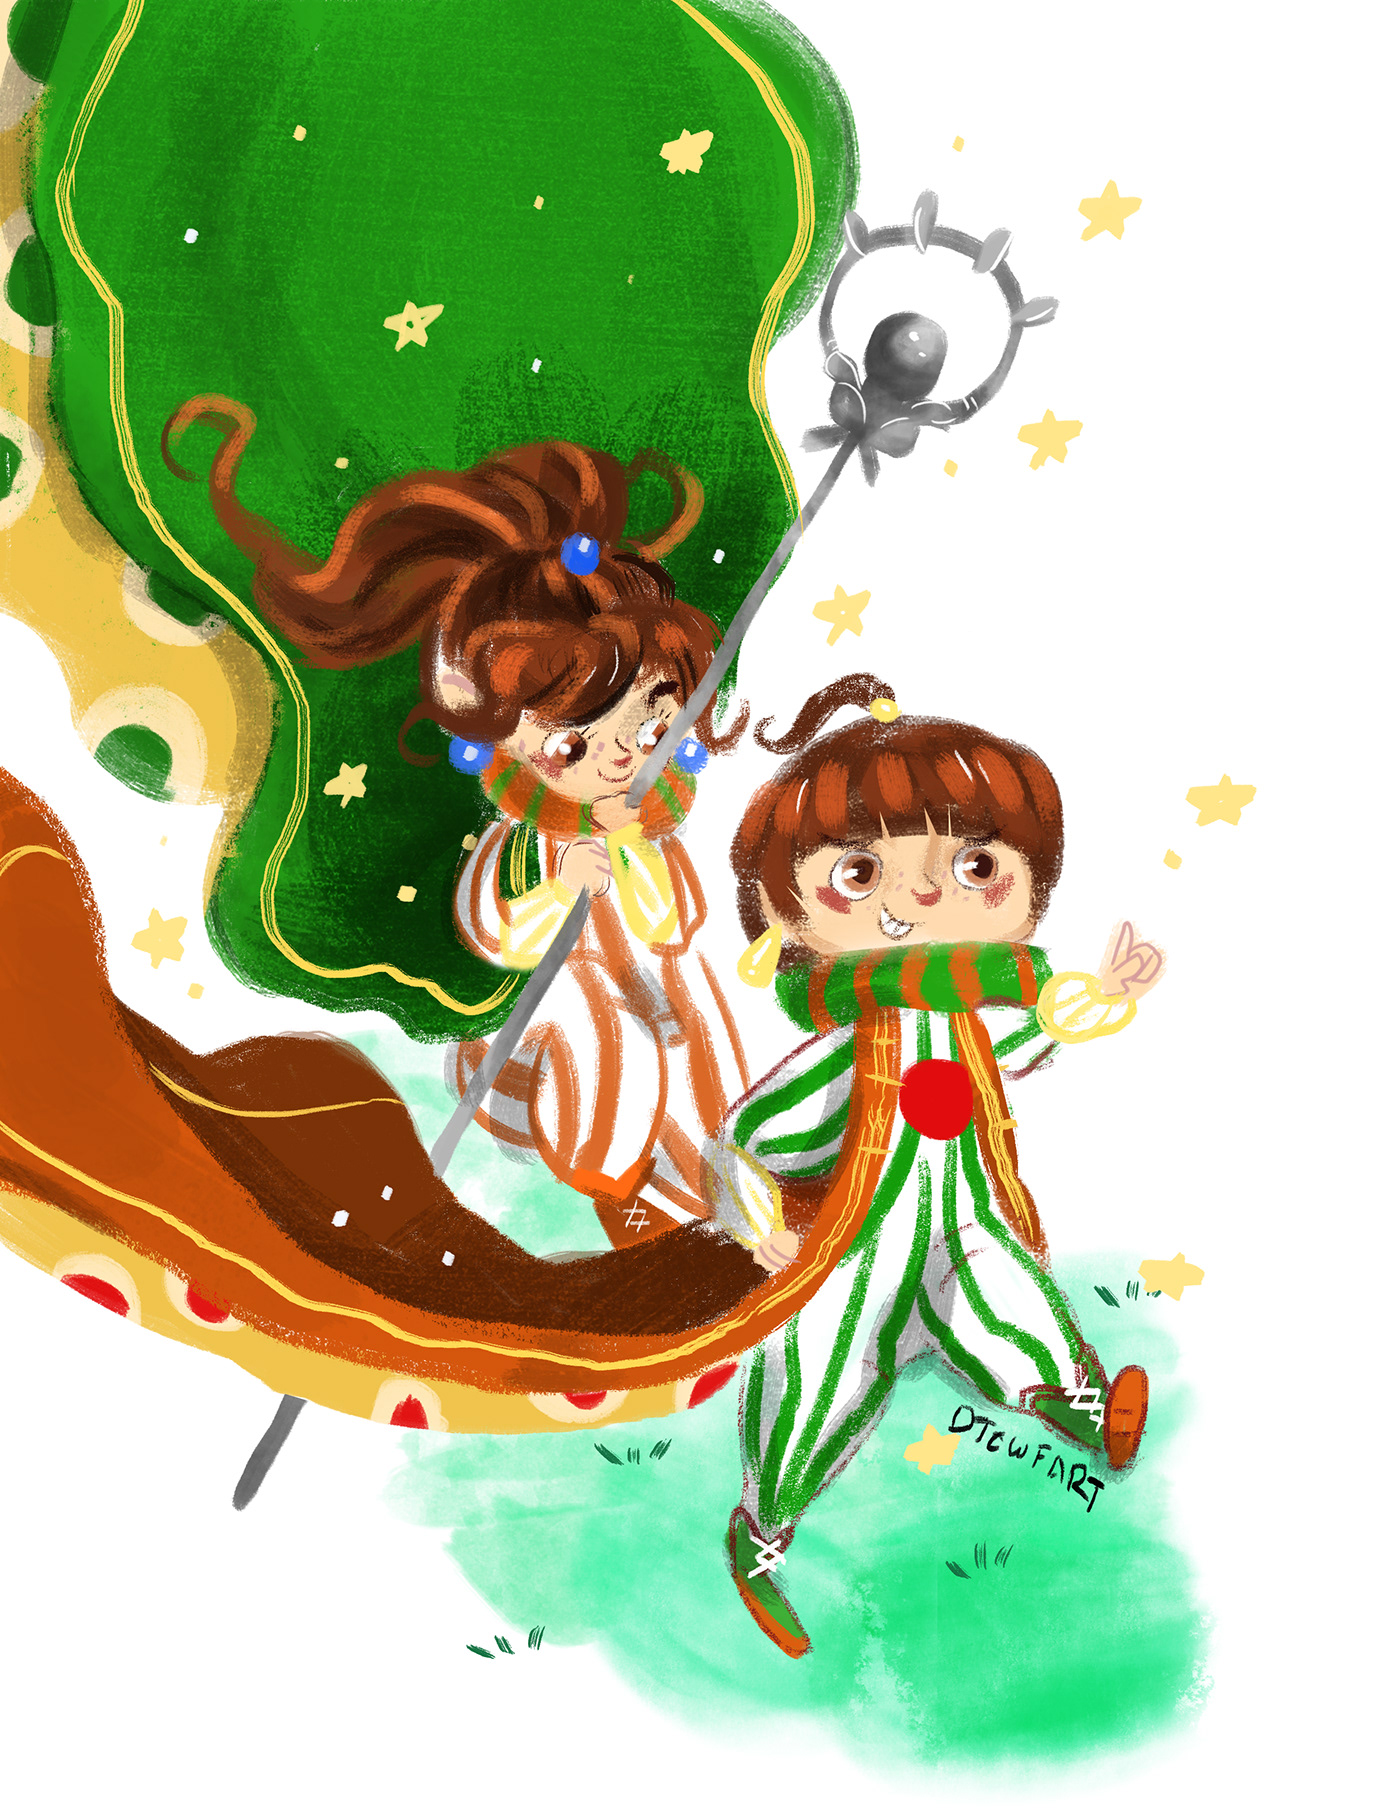 palom porom final fantasy FF4 twin magic childrens book illustration green orange